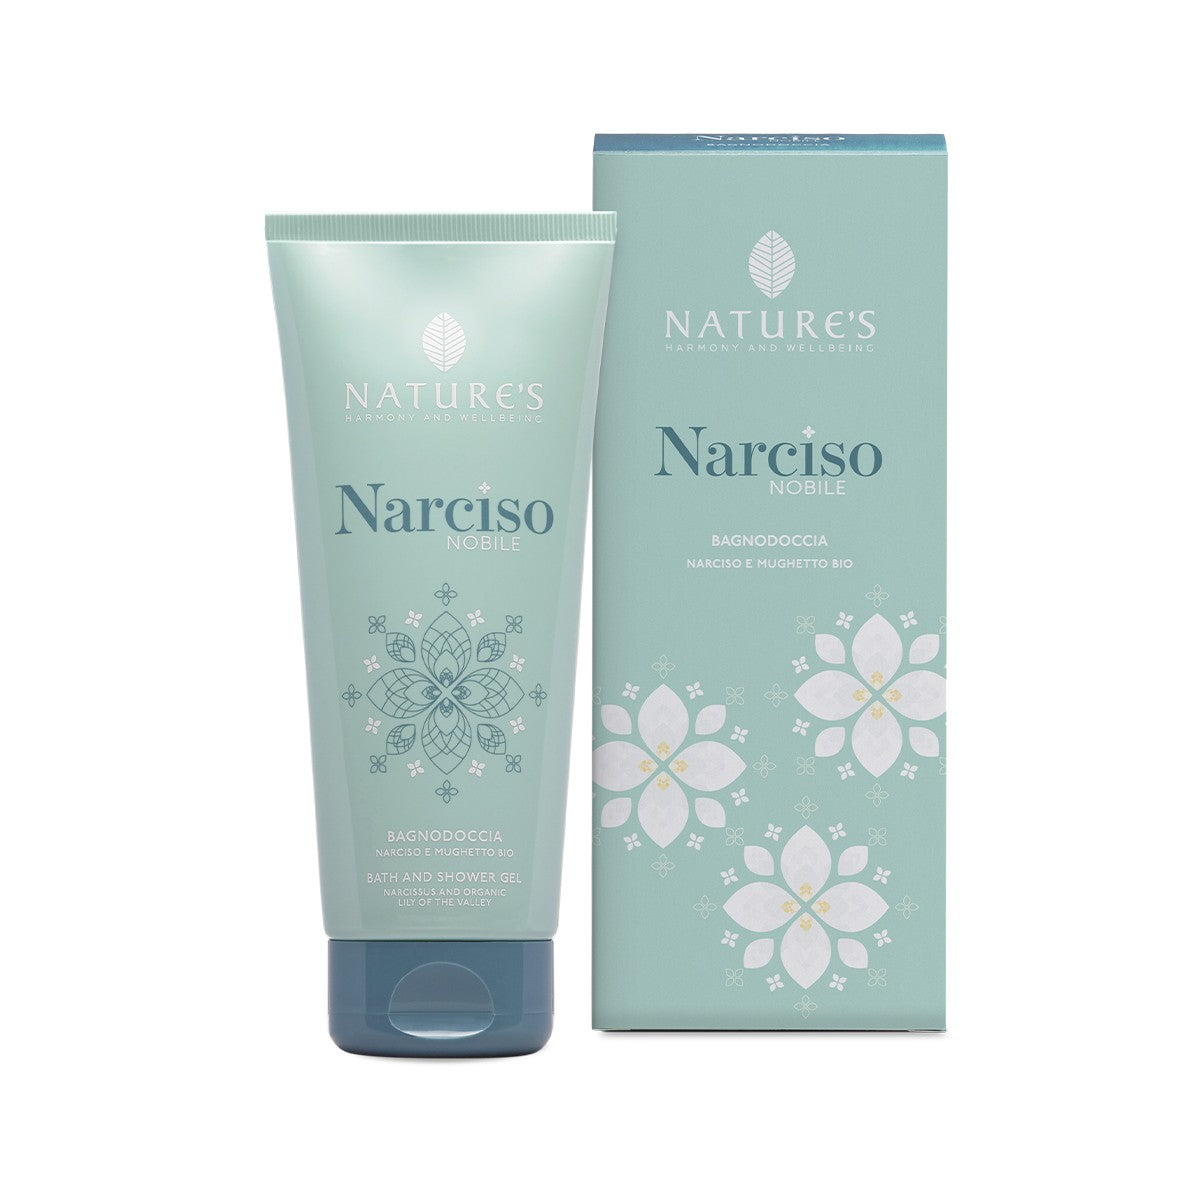 Nature's Narciso Nobile shower gel